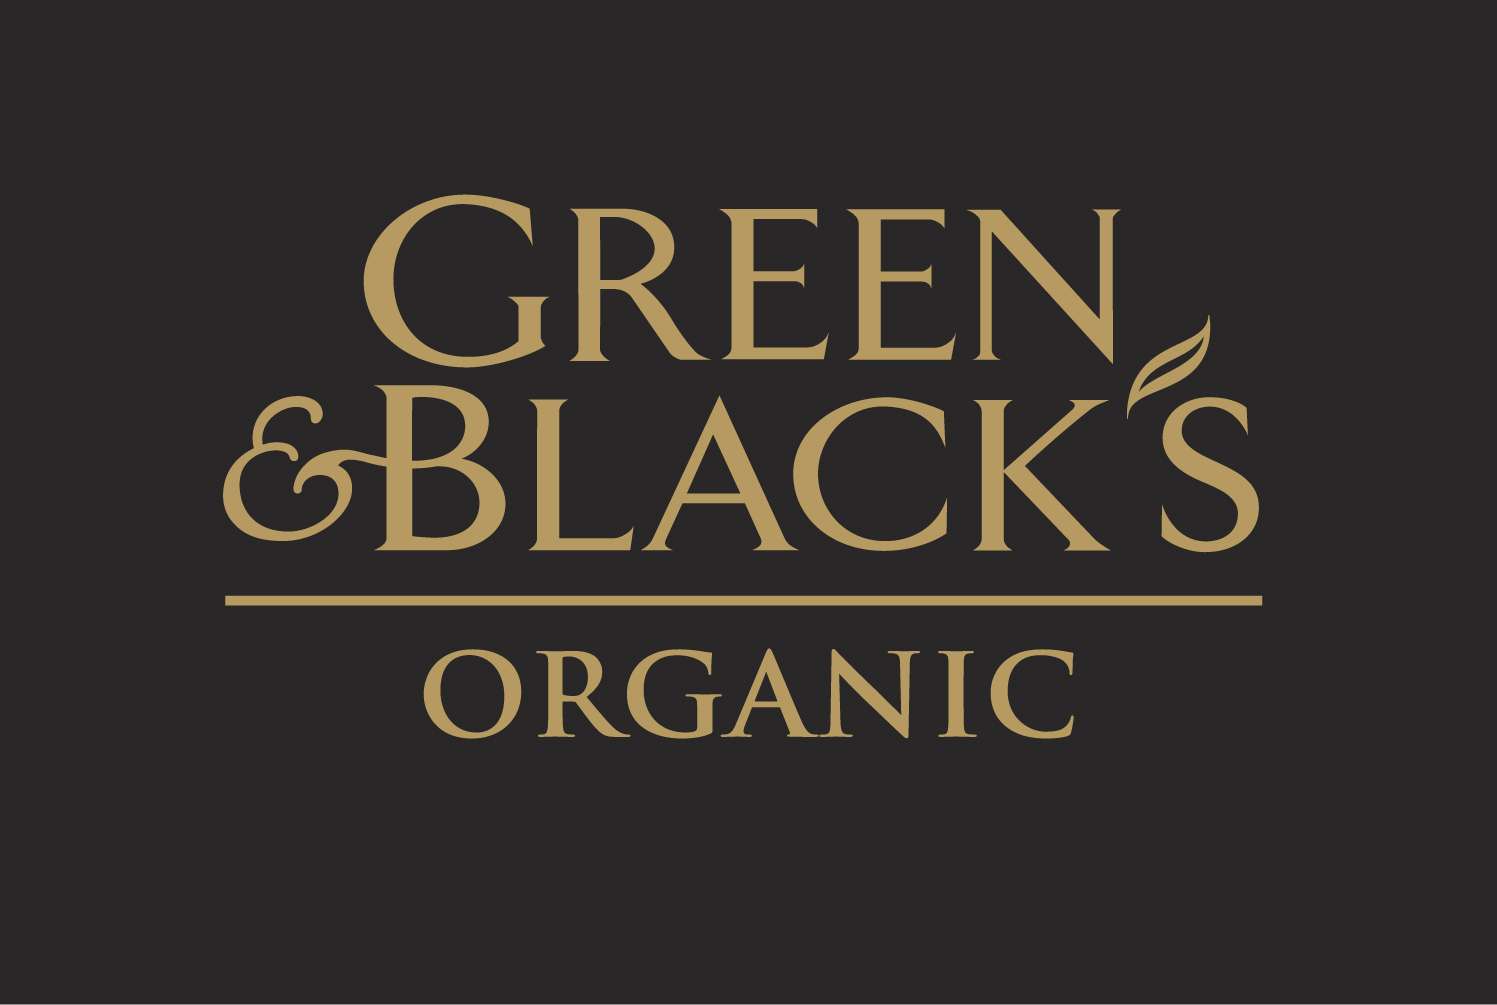 Green and Black Logo - Green & Black's Ltd | Tryfon Tseriotis Ltd – FMCG Cyprus